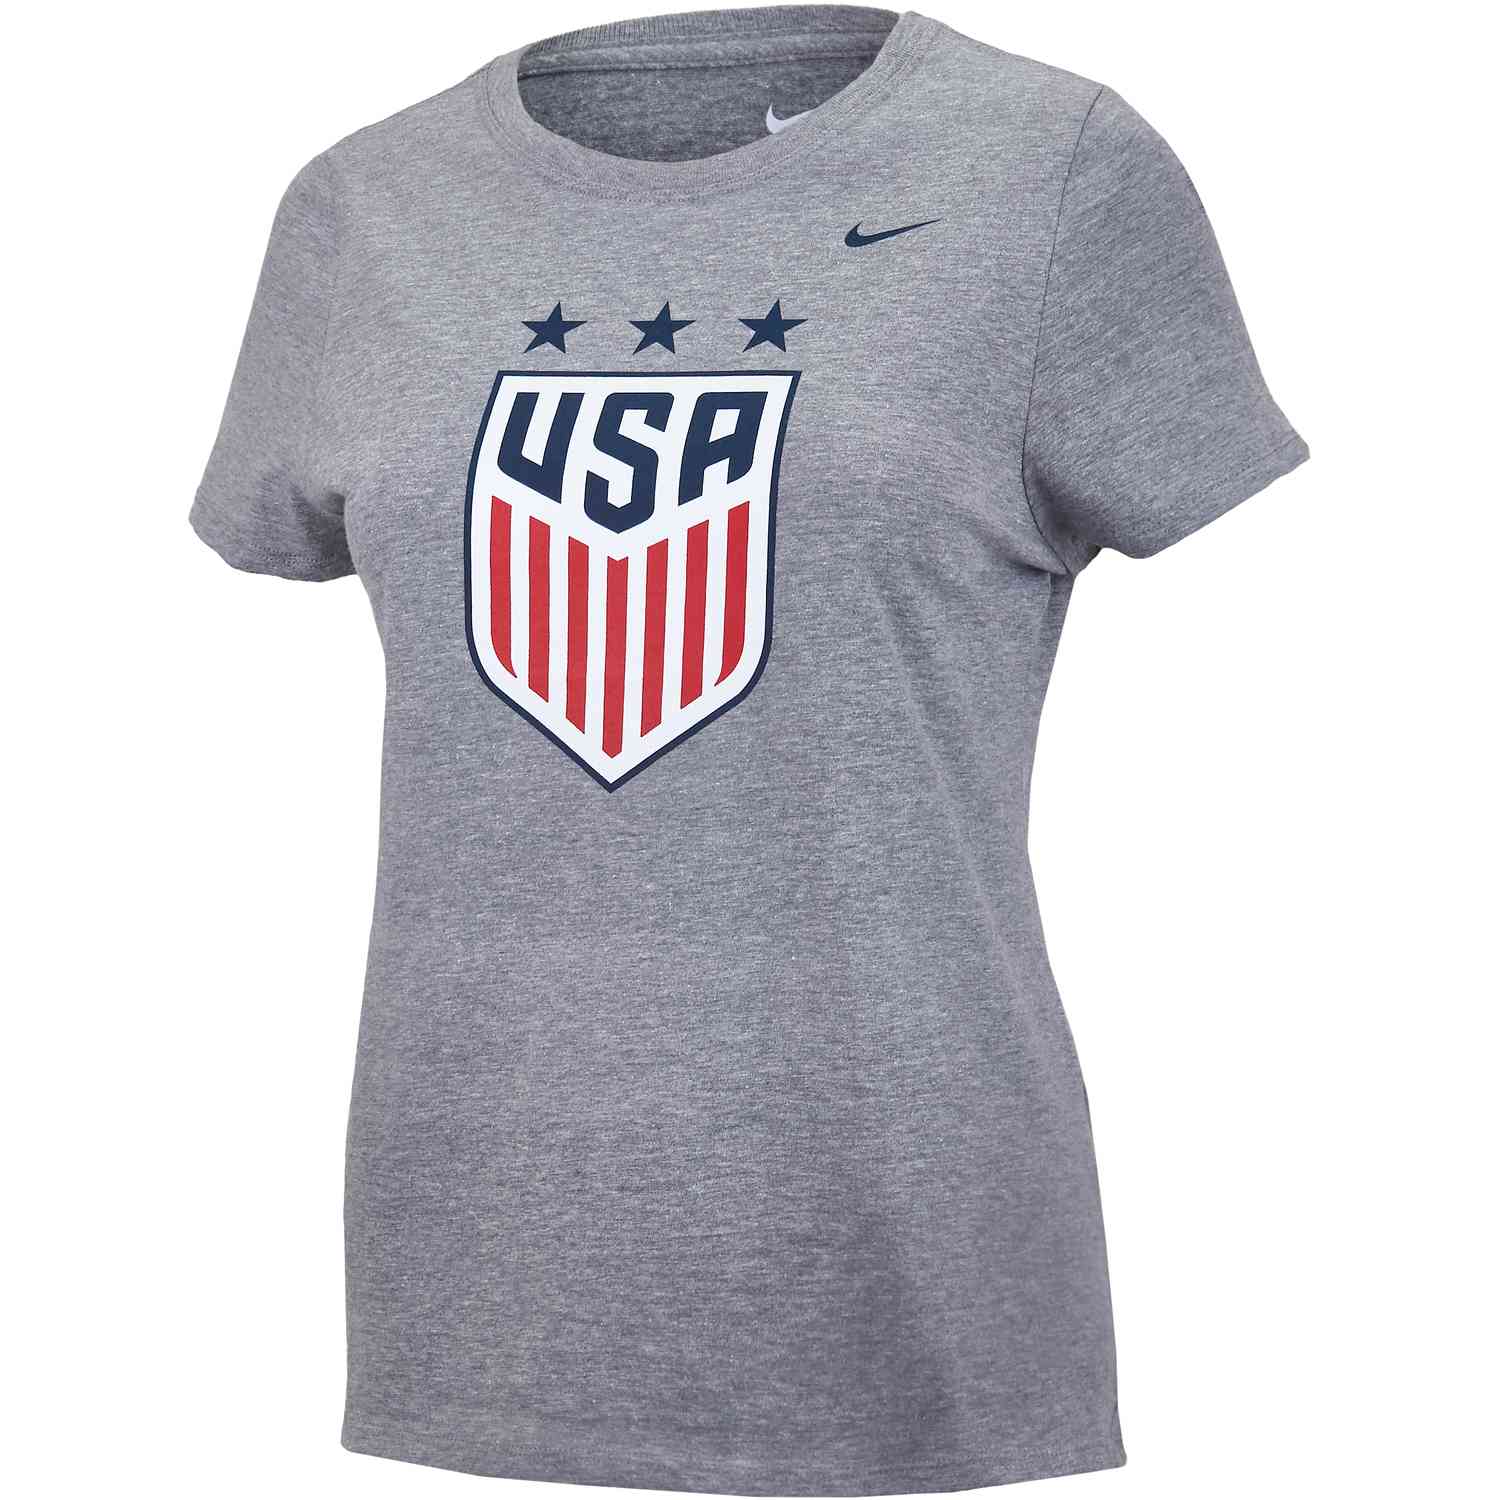 Girls Nike USWNT Crest Tee - Dark Grey Heather - SoccerPro